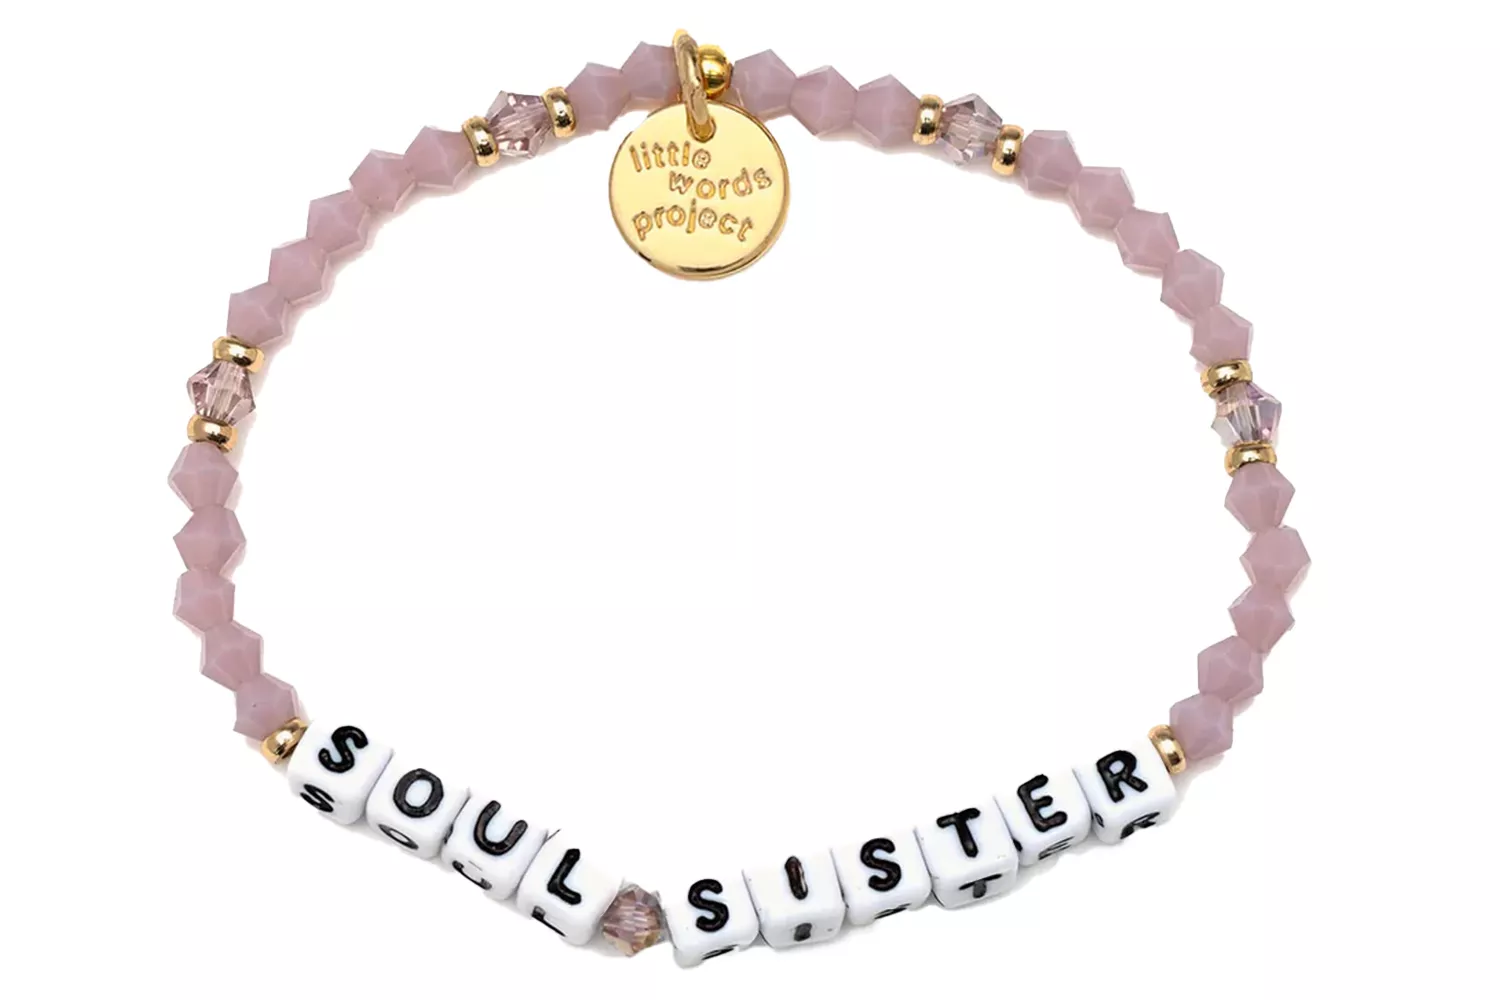 Little Words Project Soul Sisters Bracelet